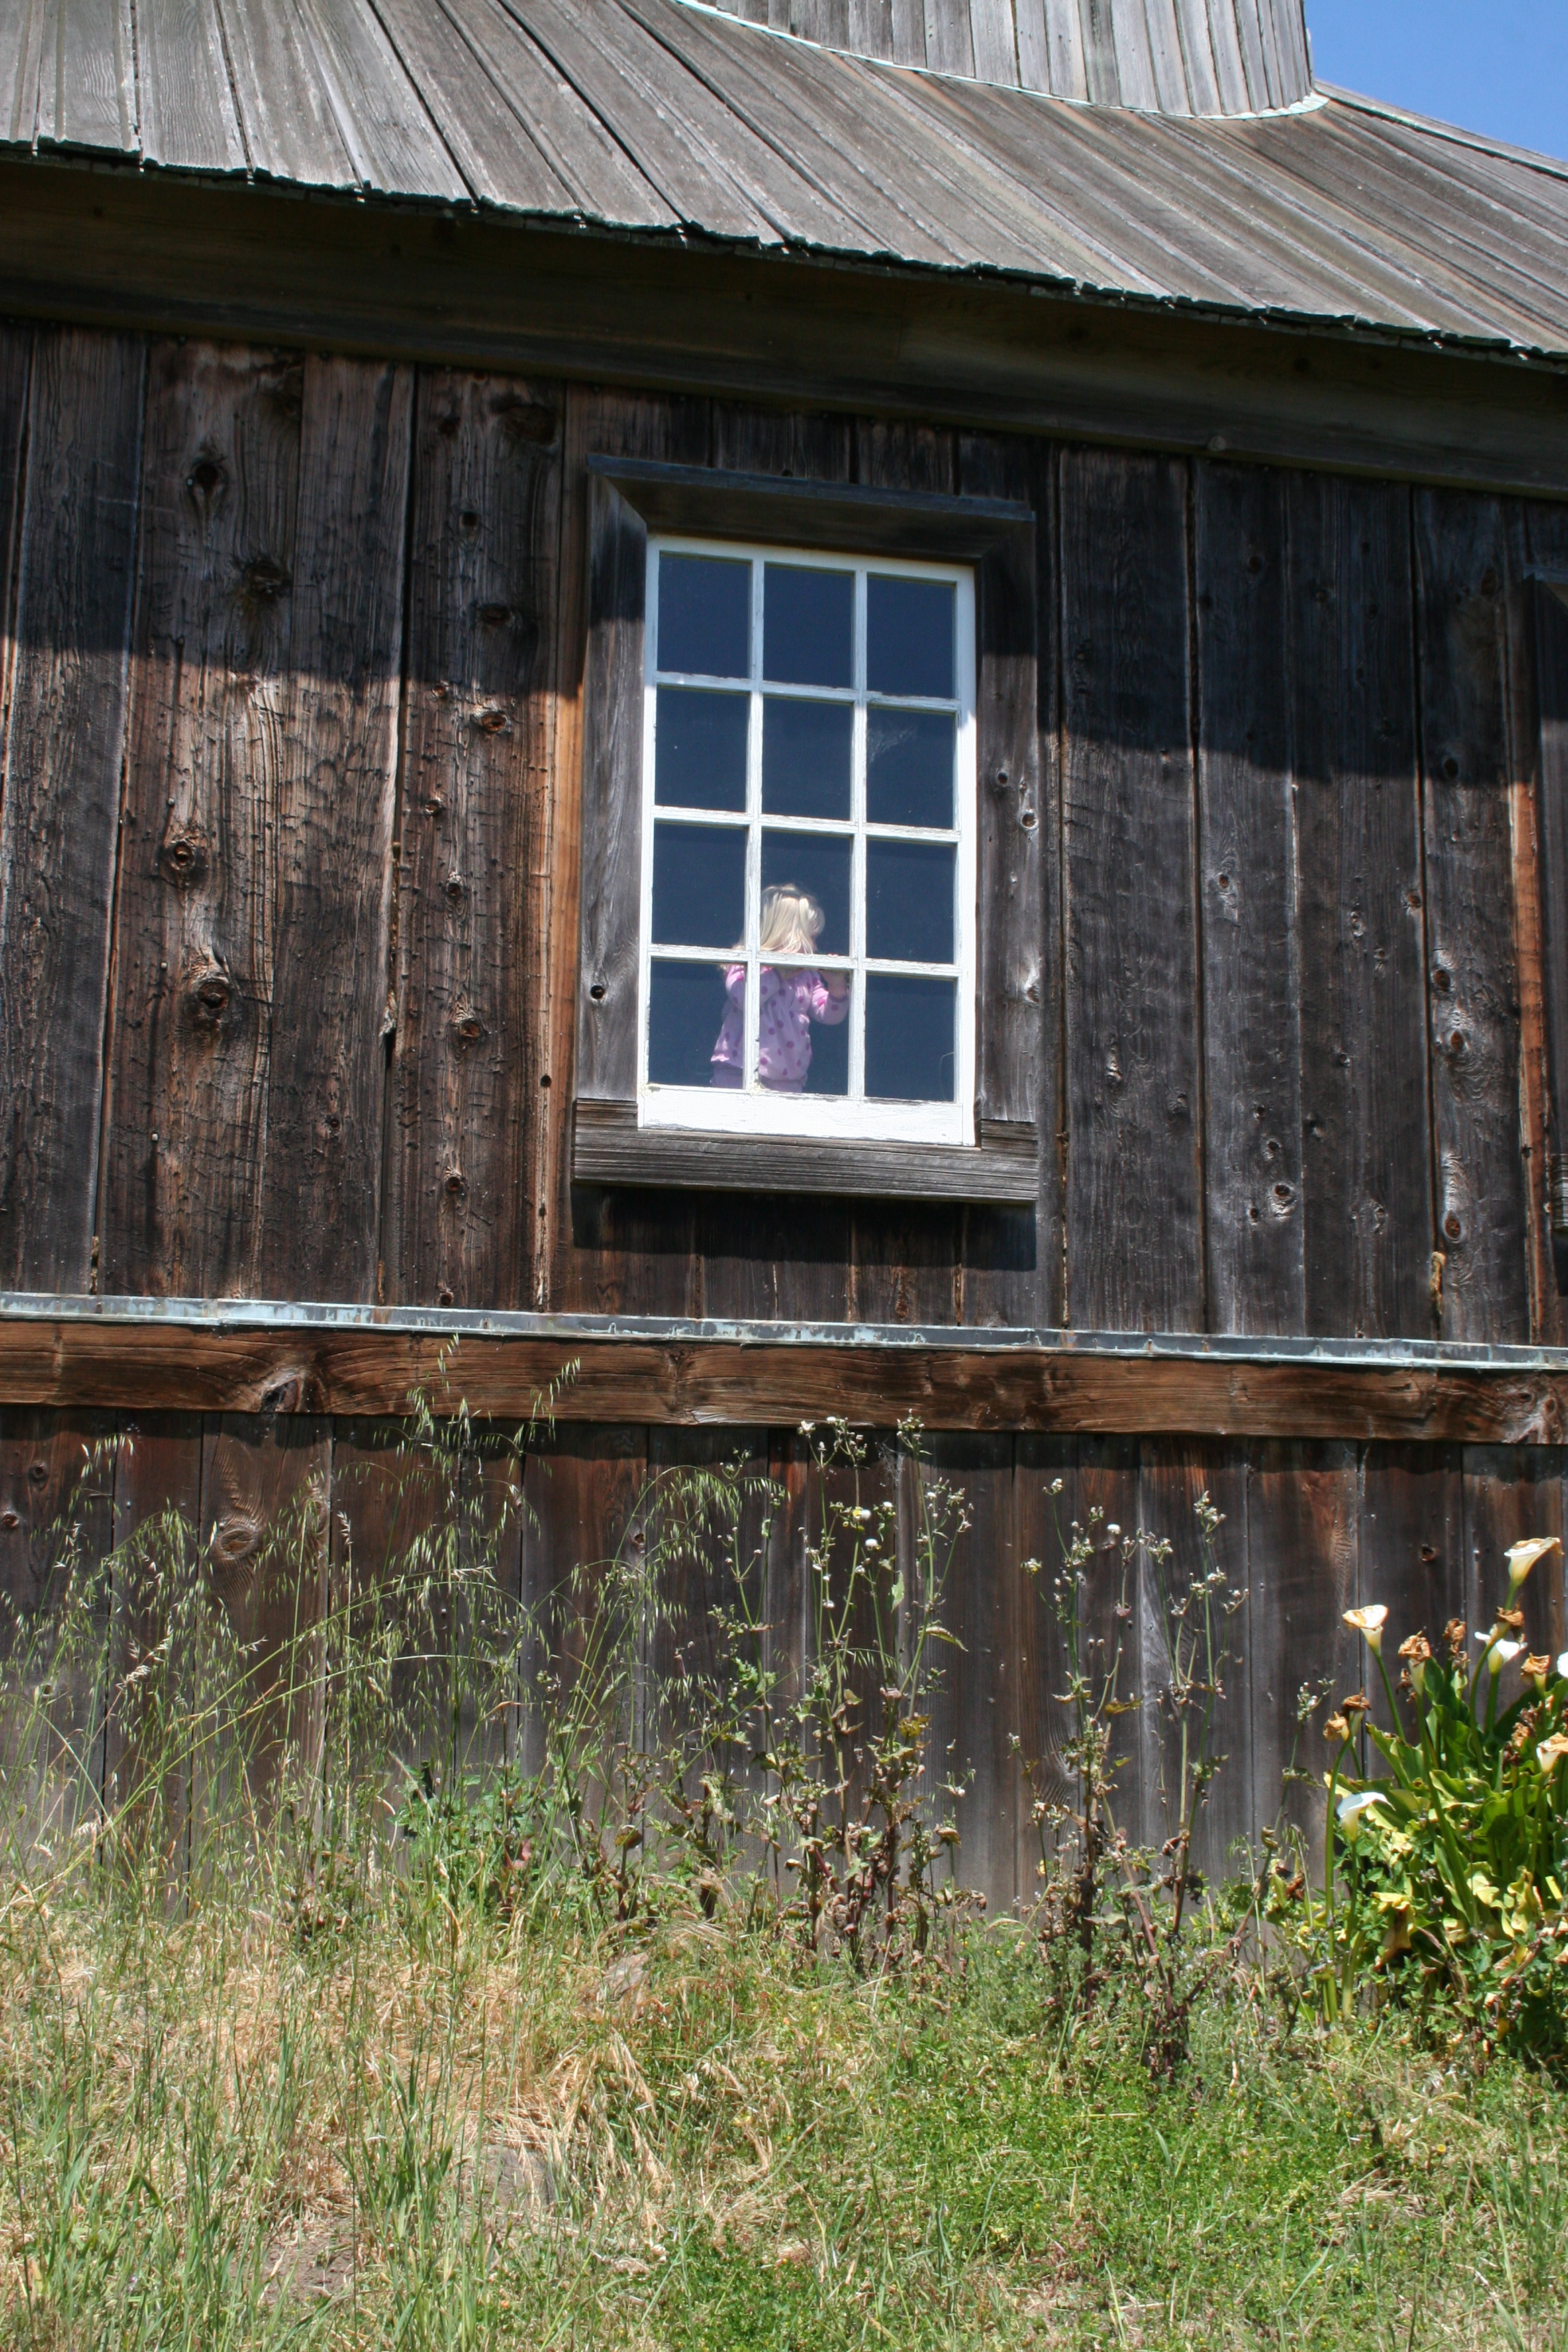 Little girl in a window in a fort photo